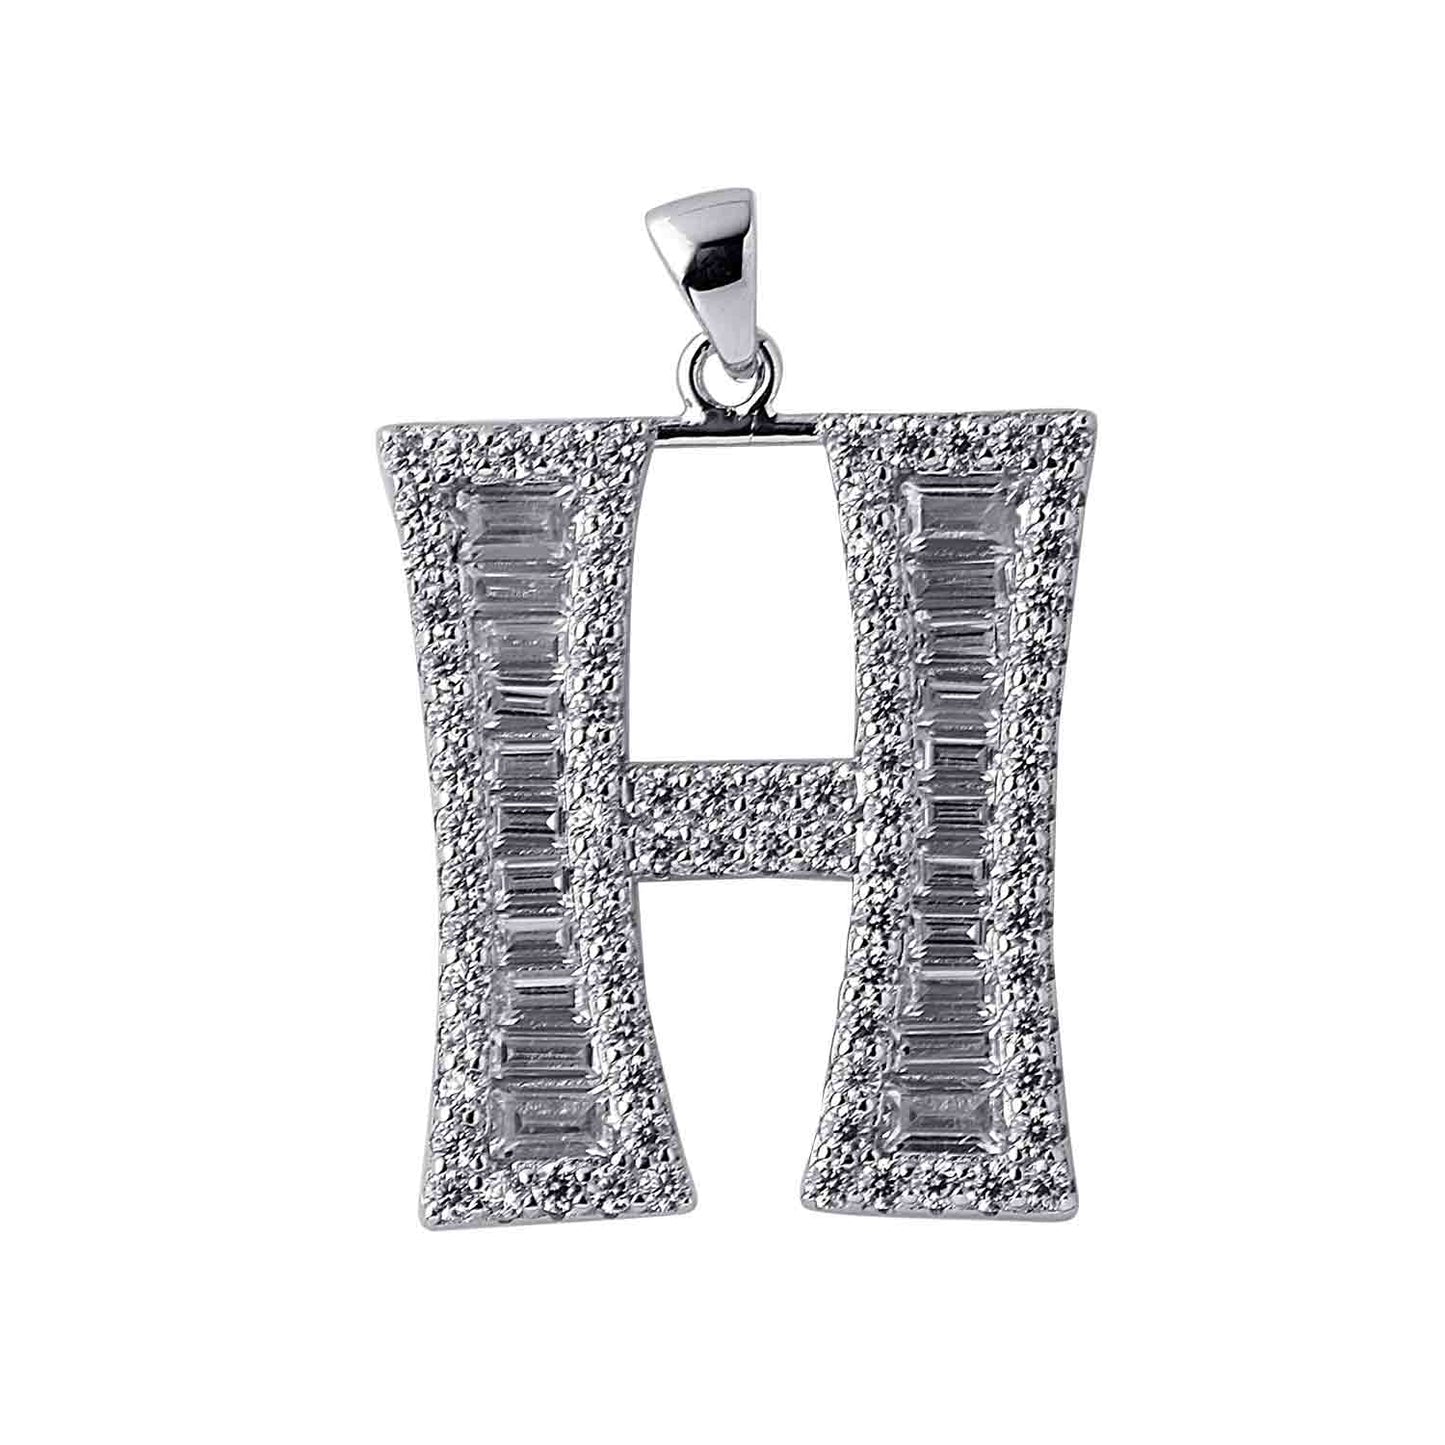 Silver H pendant